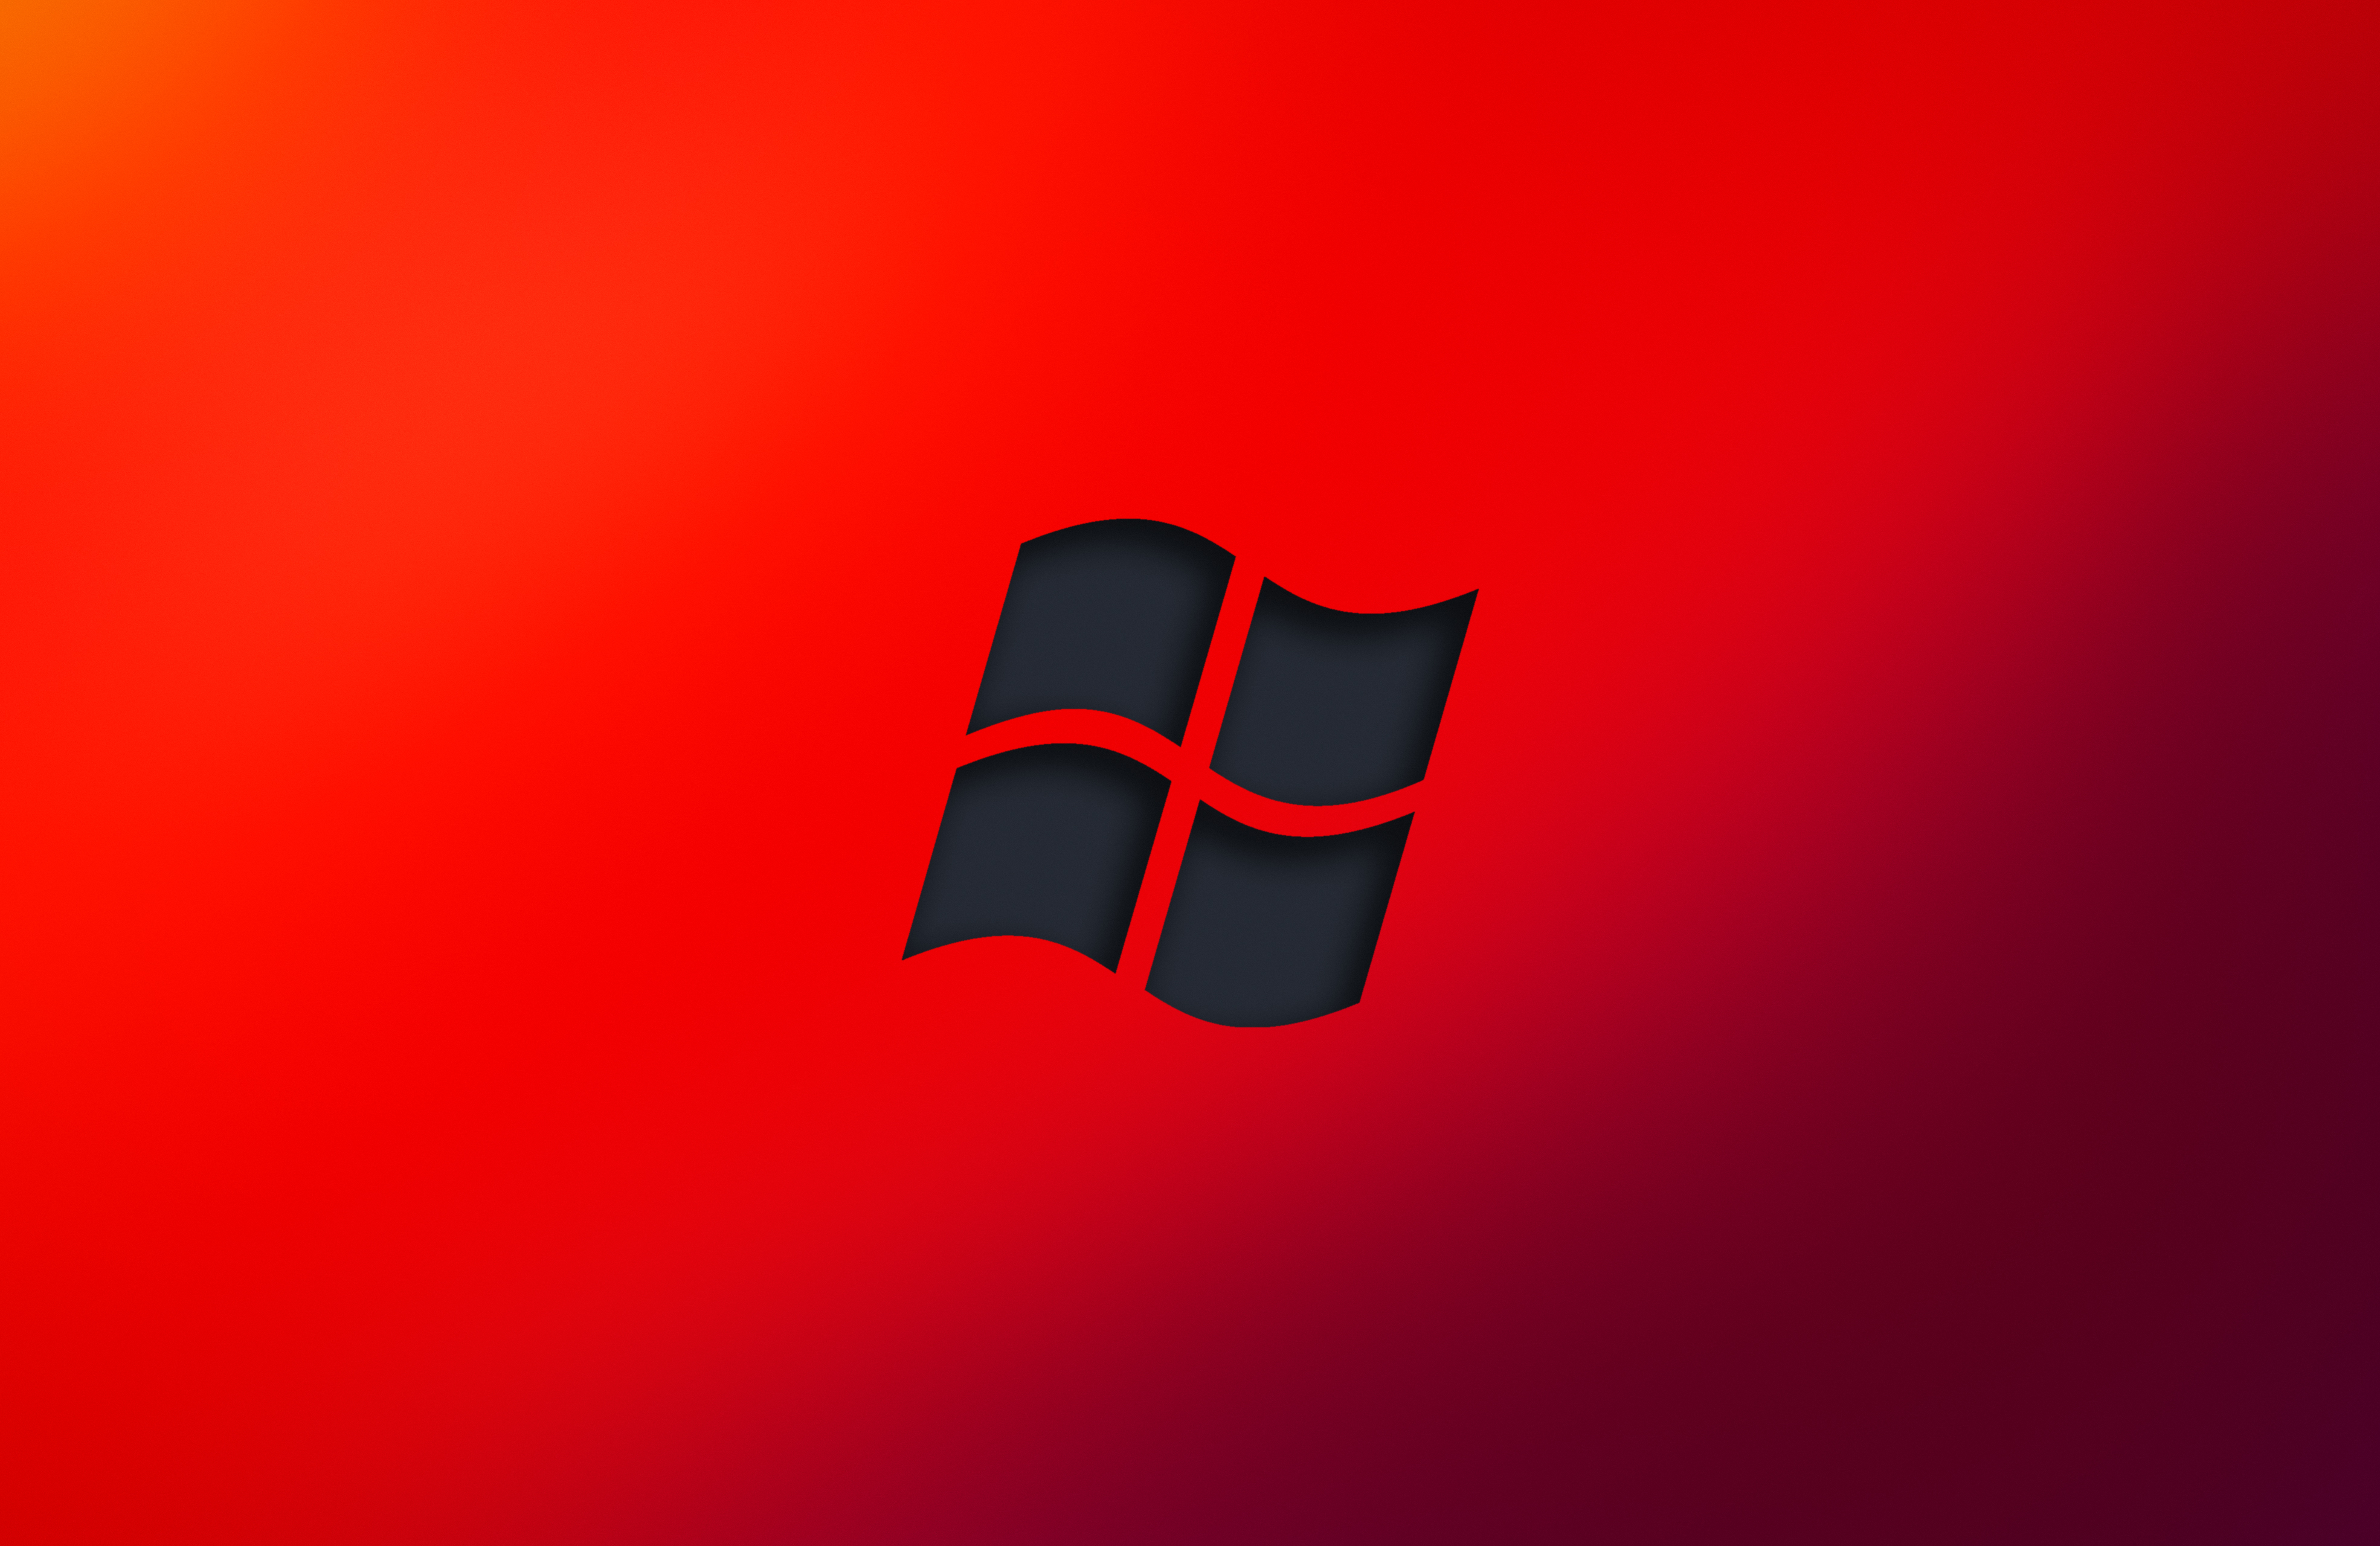 General 3940x2560 minimalism red windows logo Windows XP gradient red background logo Microsoft operating system Microsoft Windows simple background digital art